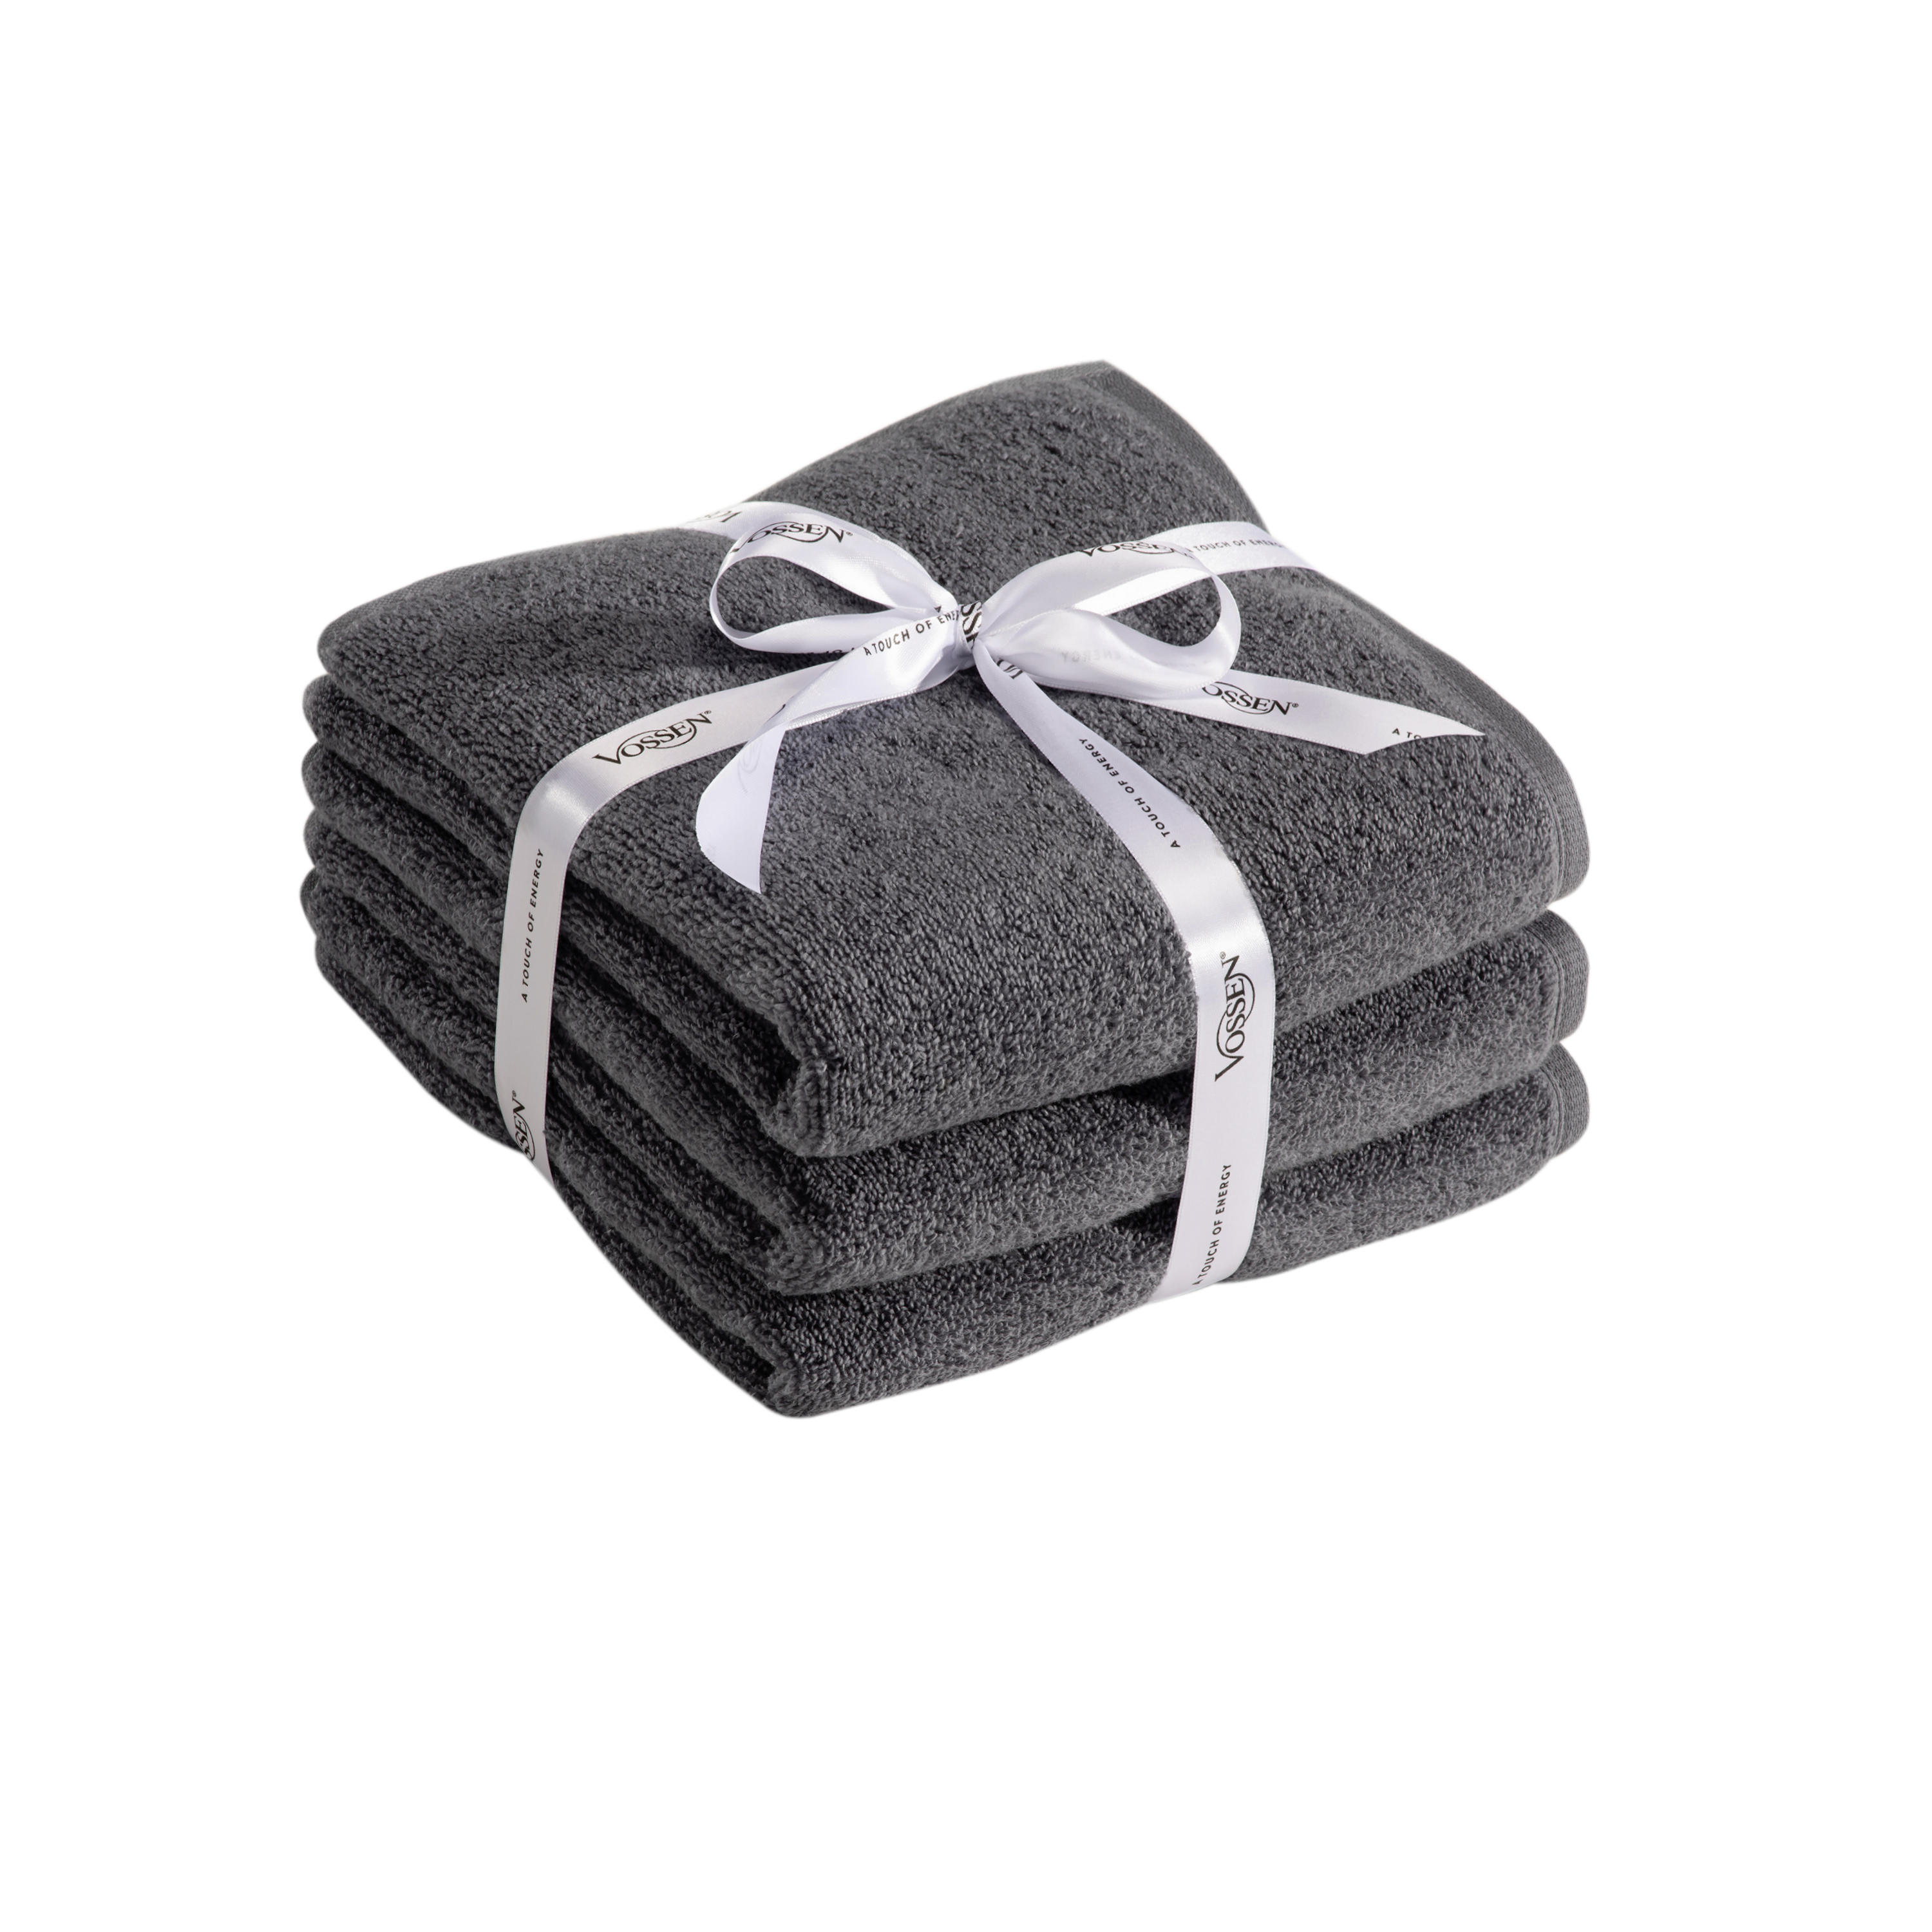 HANDTUCH Smart Towel  - Grau, Basics, Textil (50/100cm) - Vossen